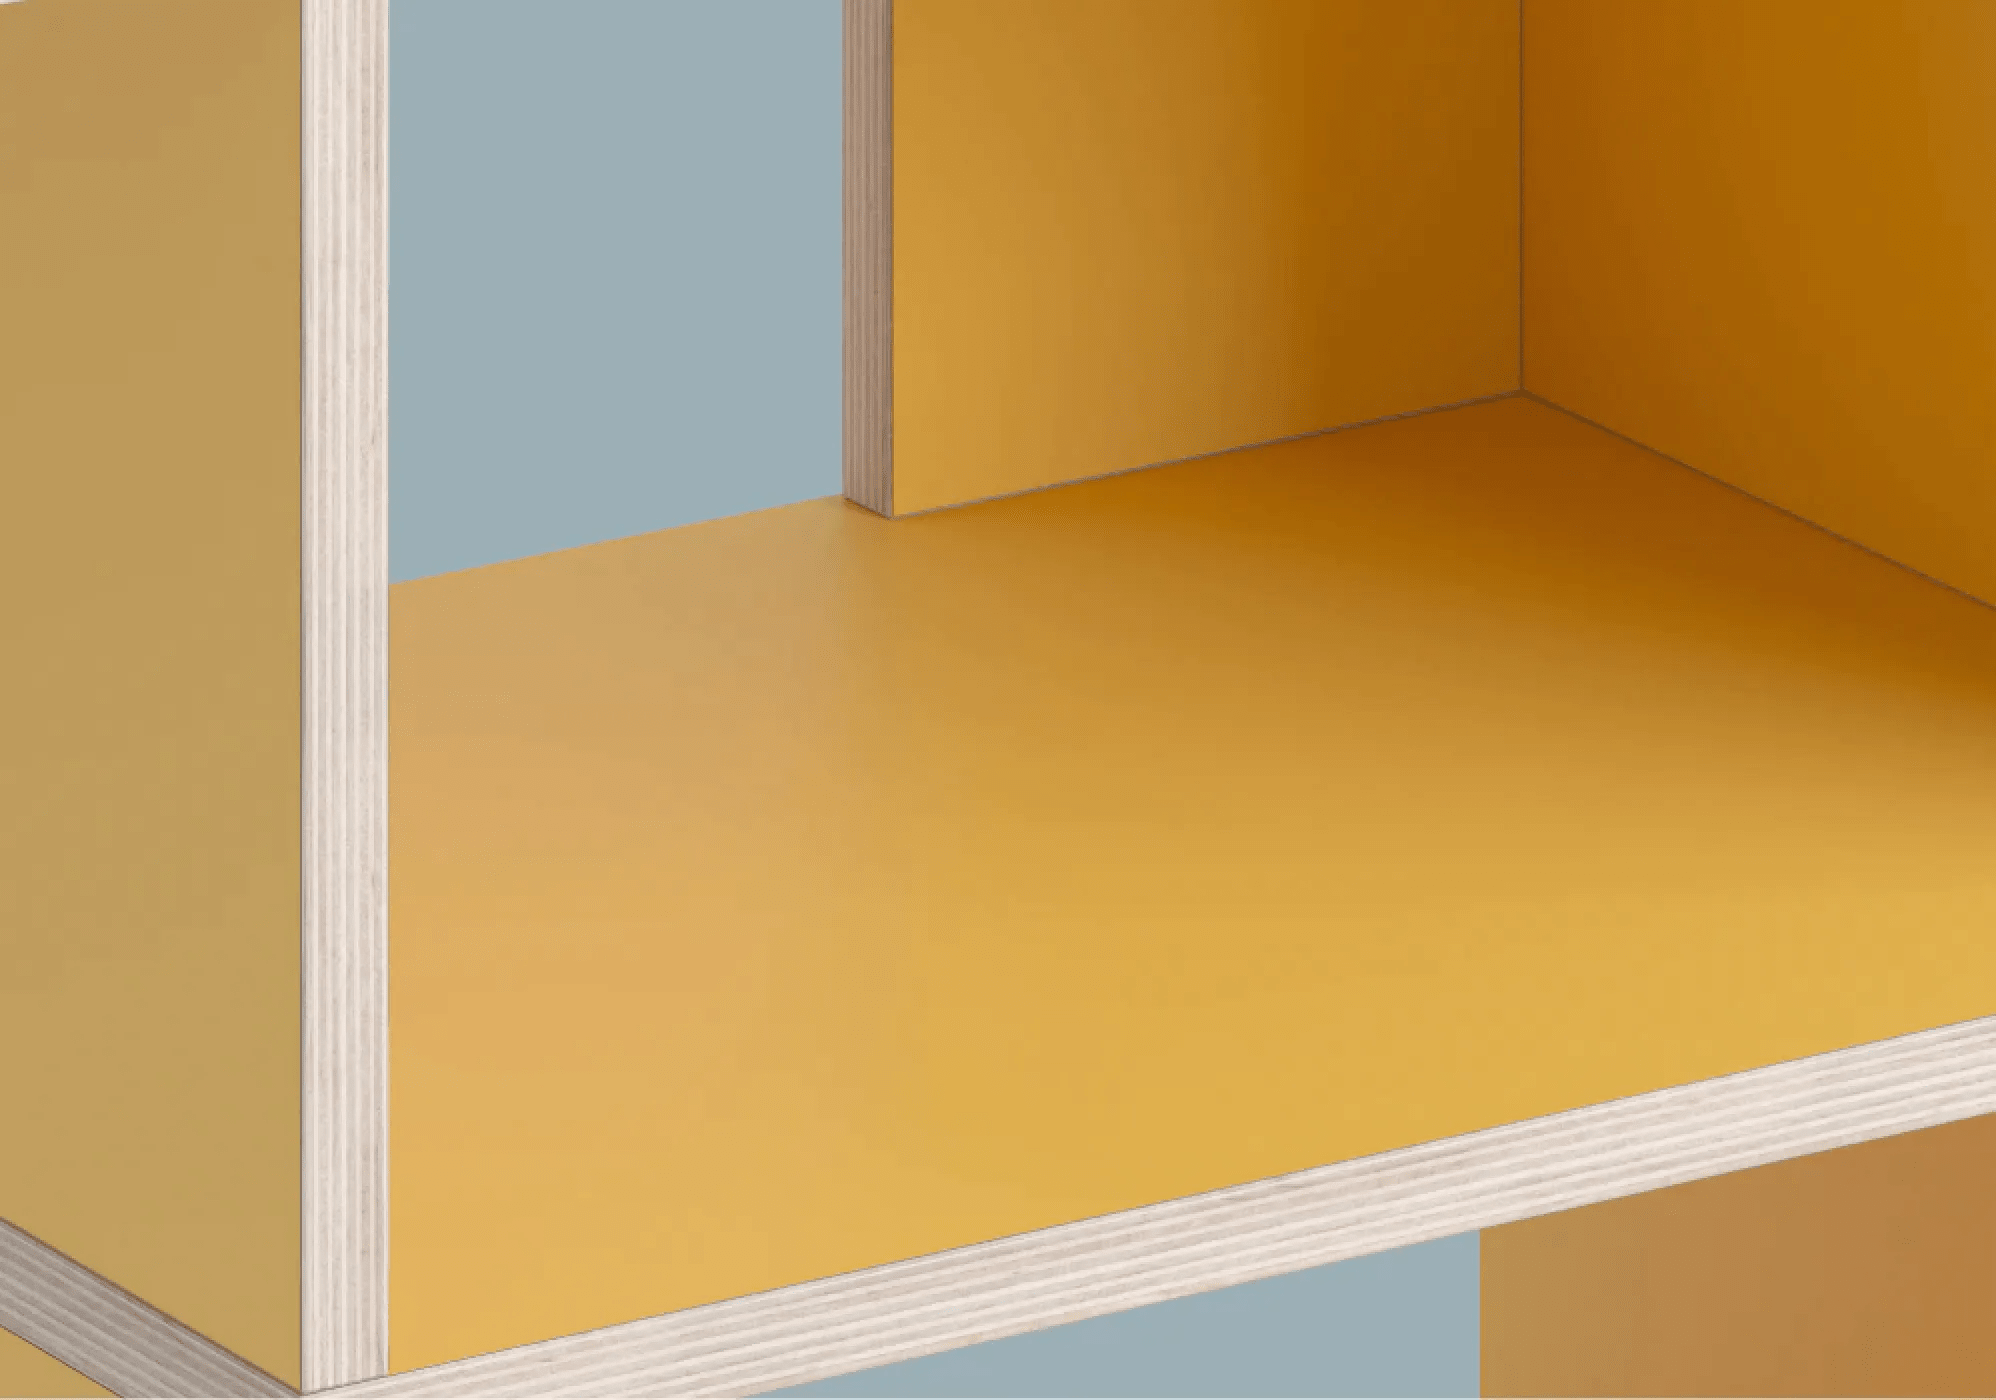 Låg Bred Gul Plywood 4-Lådor Byrå med Bakpaneler plywood - 200x43x40cm 7